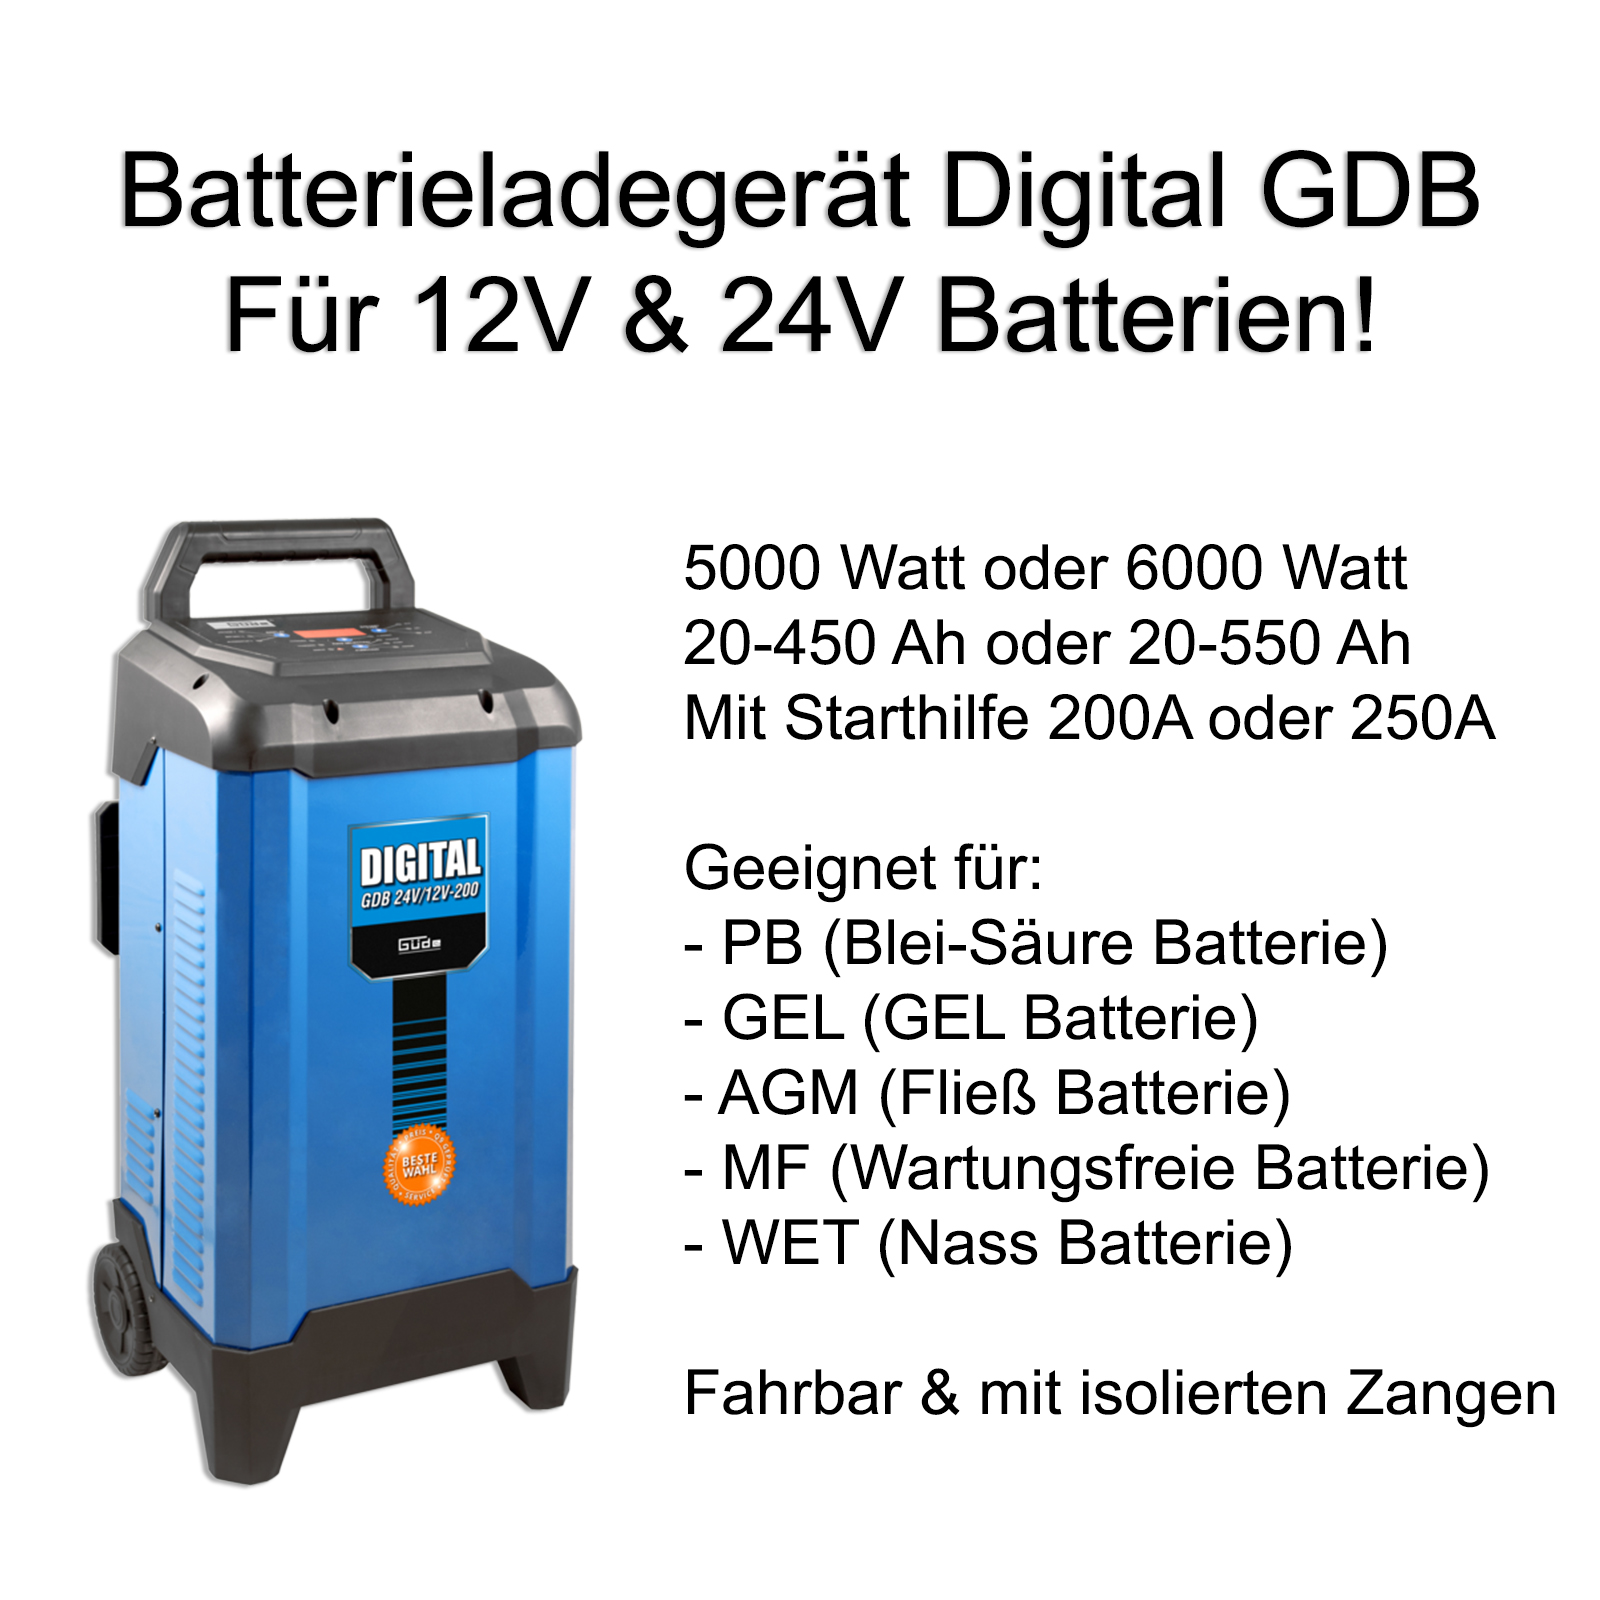 Batterieladegerät 230V/12+24V 250A Euro-Start 250 Elmag - jetzt